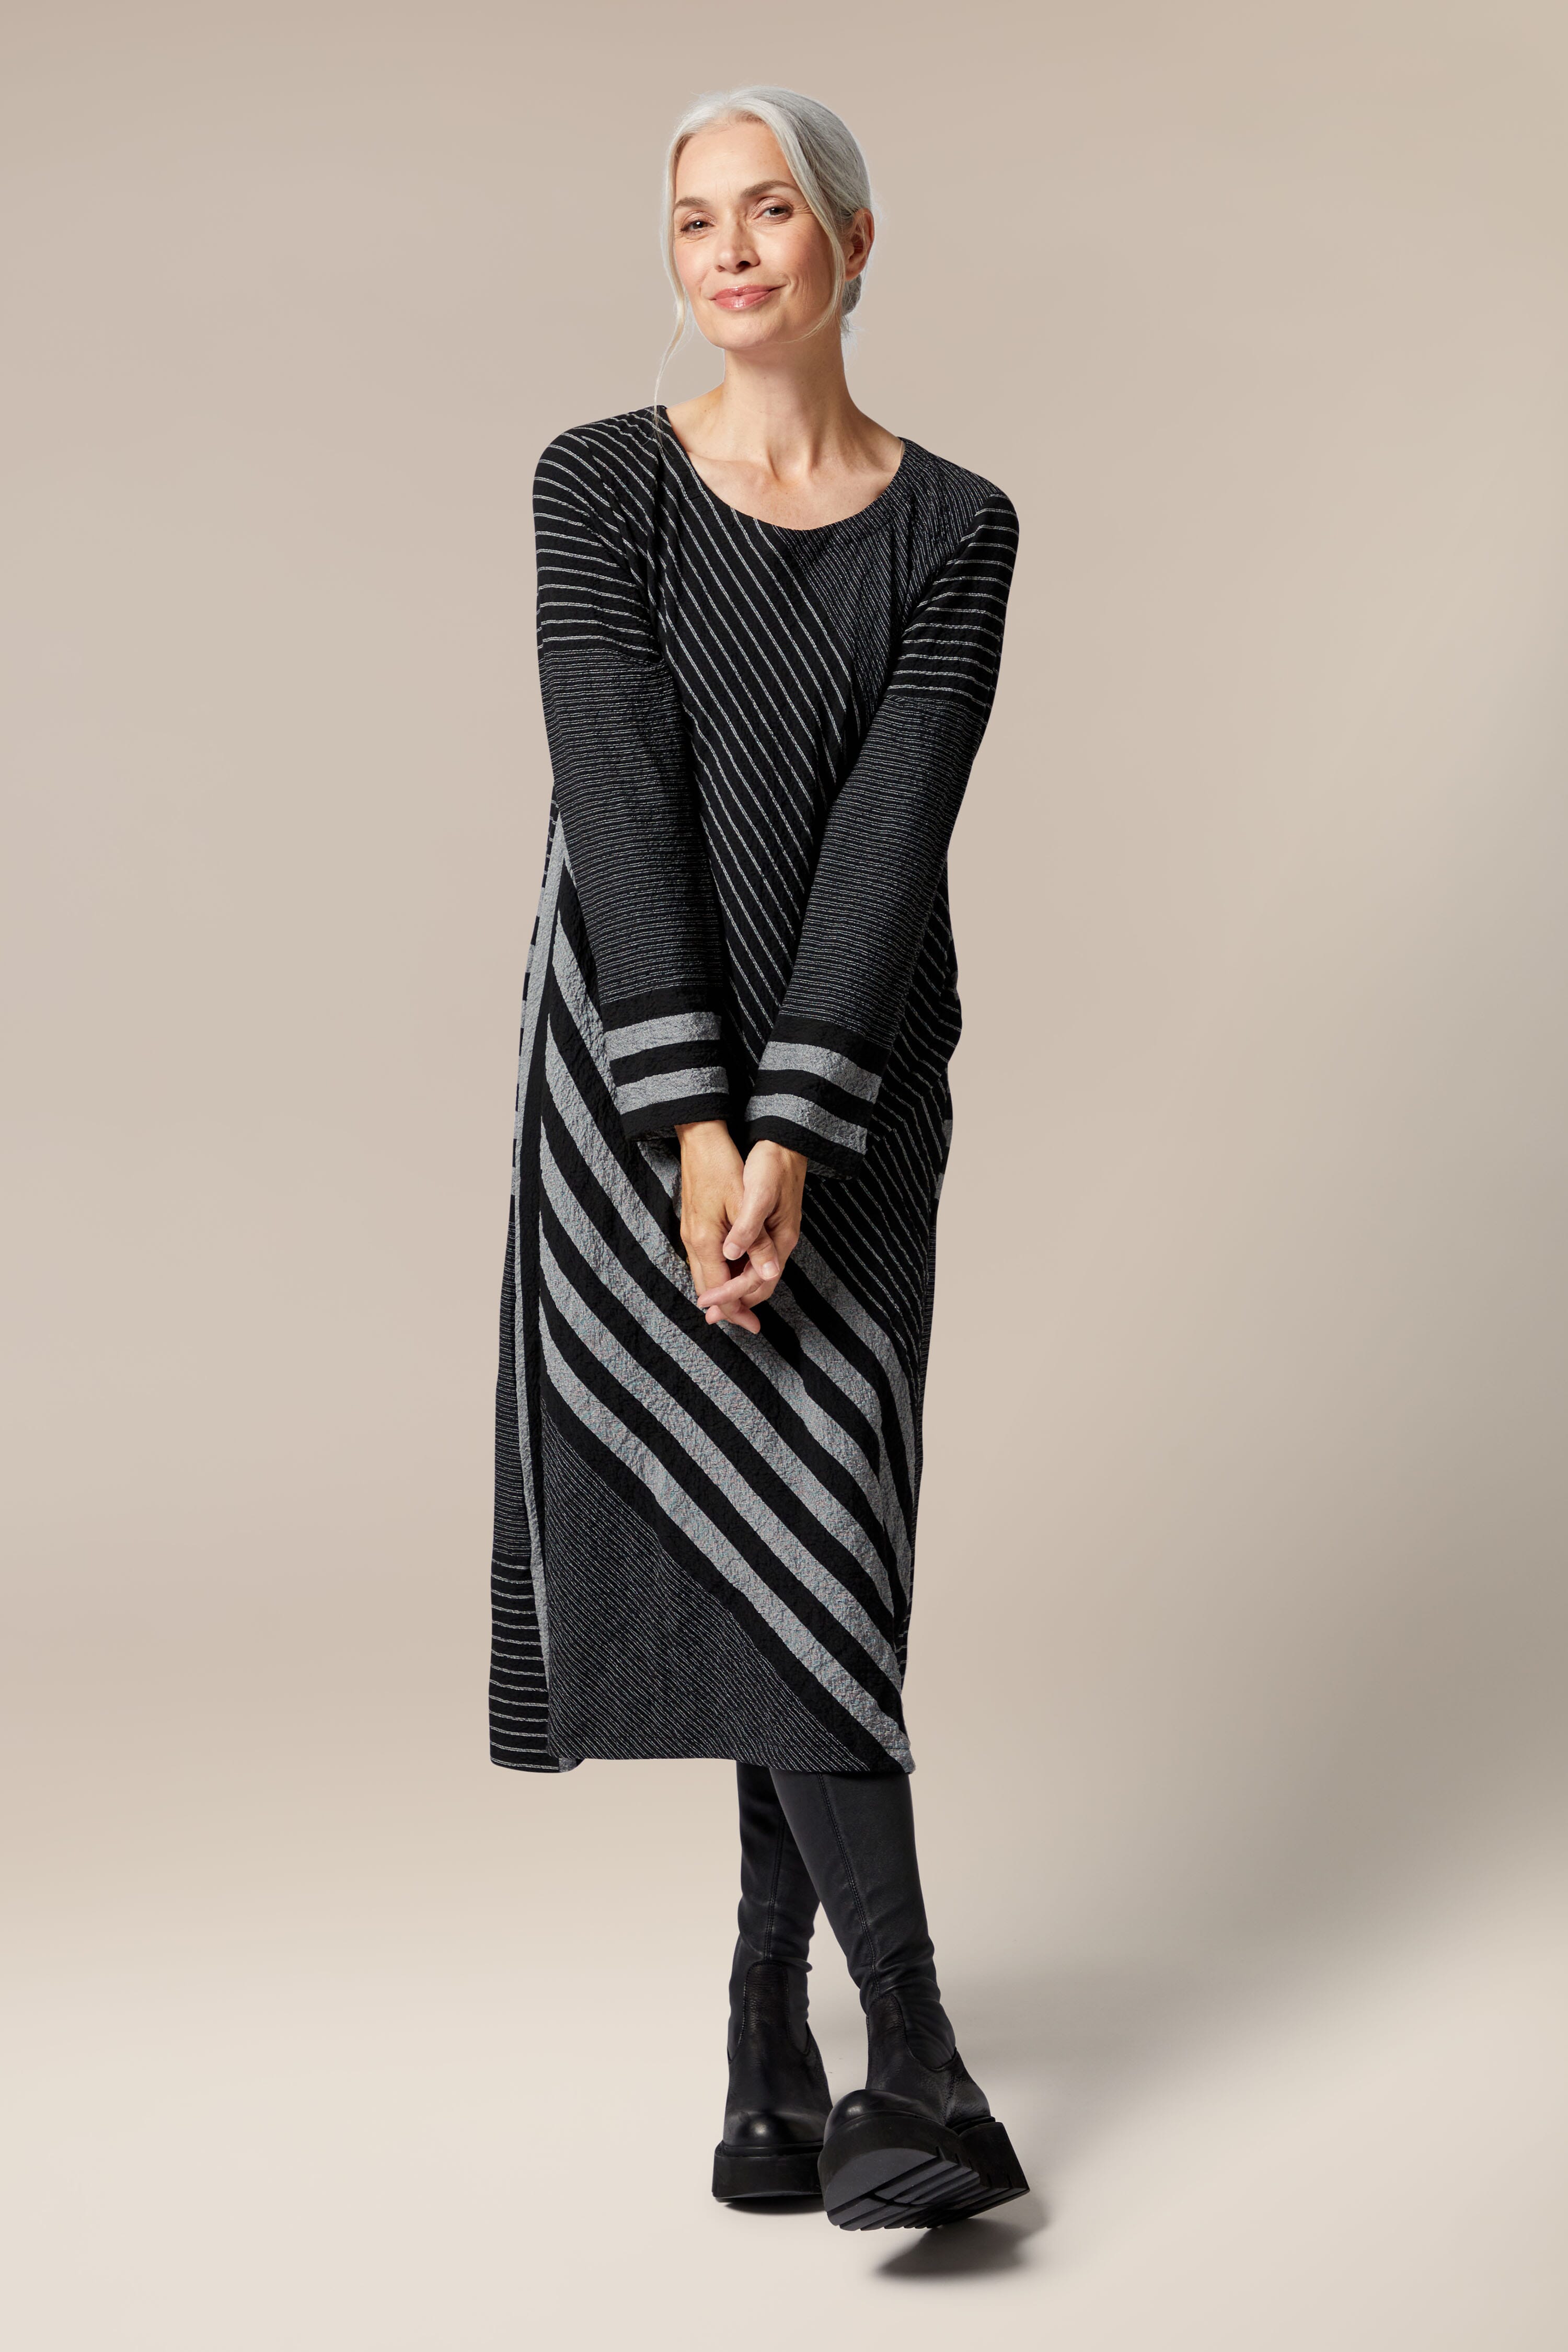 Black/Grey Stripe Mix Dress - Naya